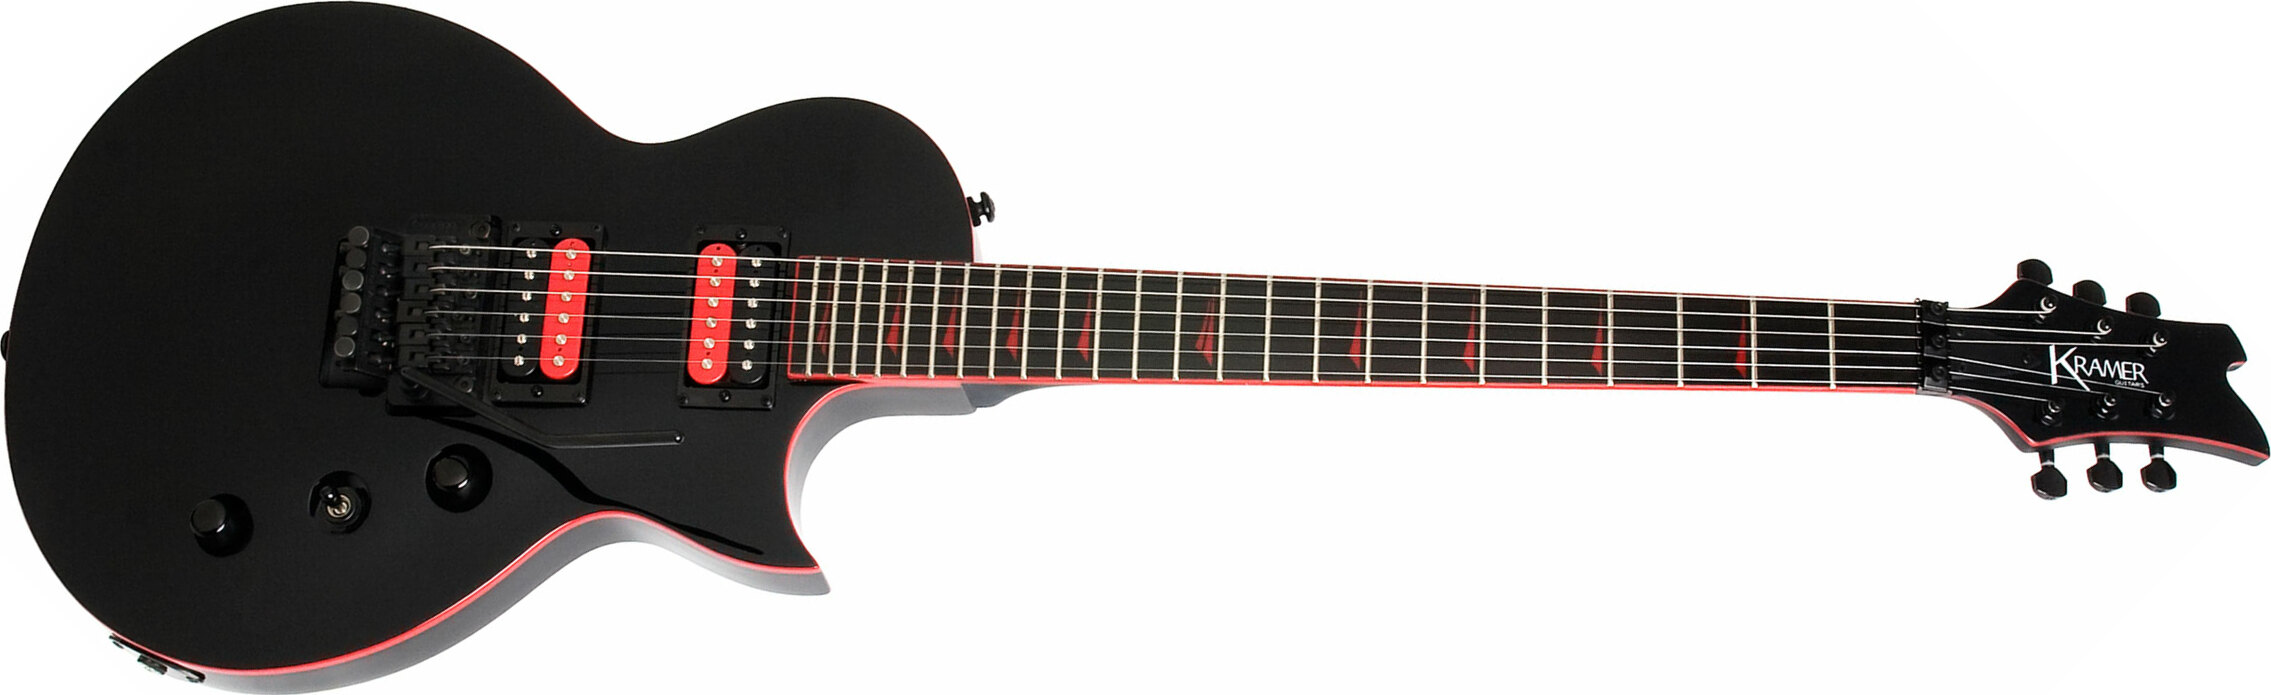 Kramer Assault 220 2h Fr Rw - Black Red Binding - Guitarra eléctrica de corte único. - Main picture